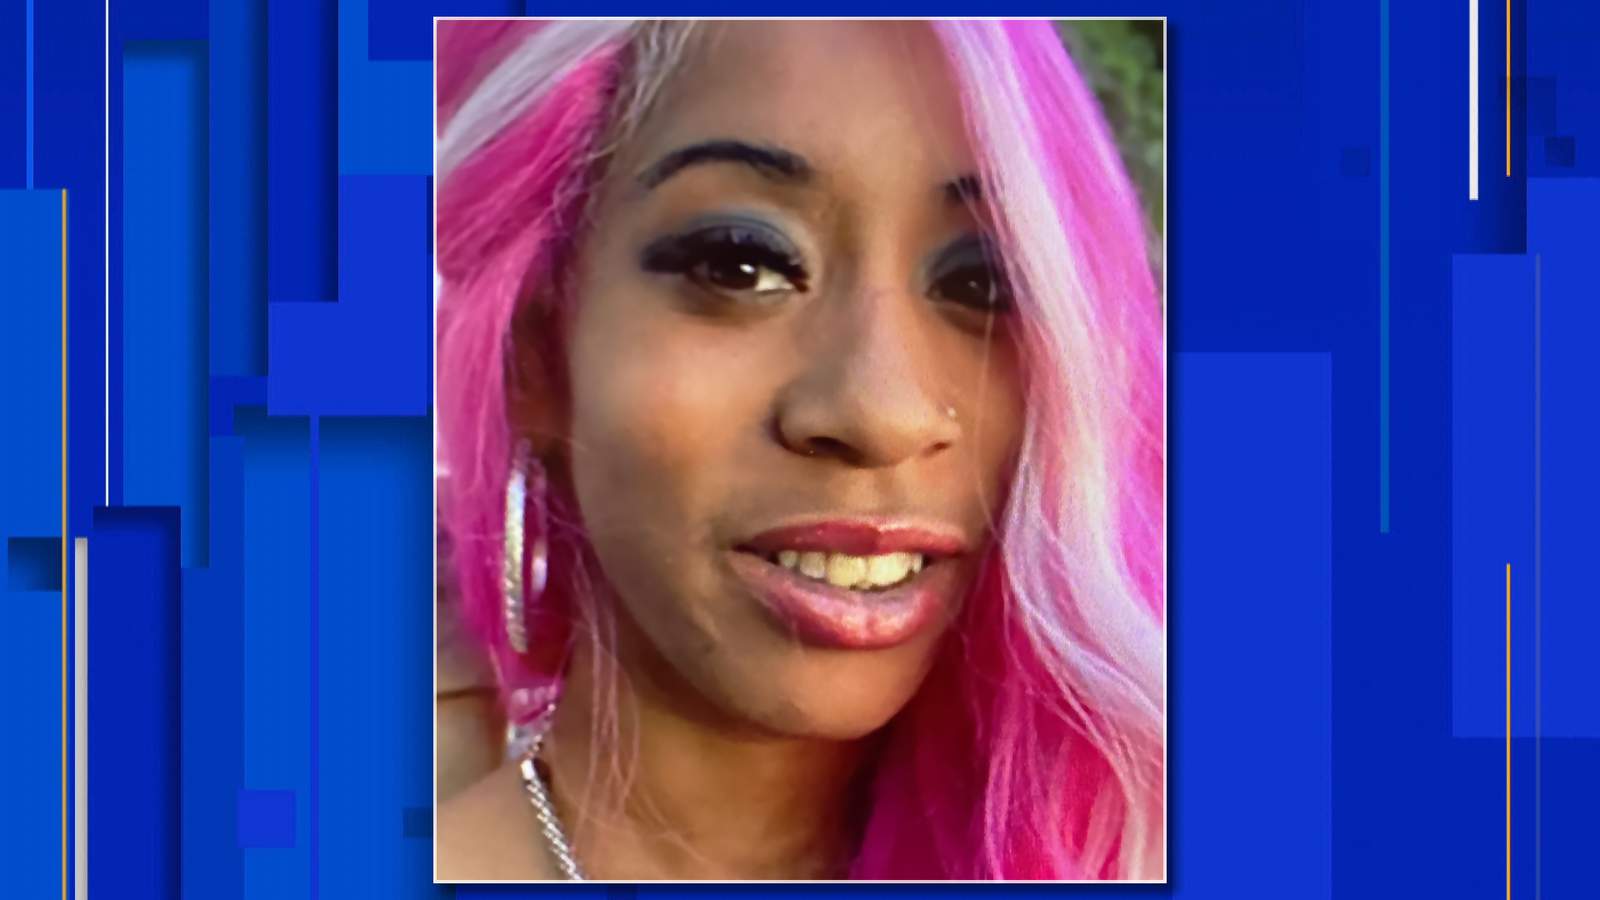 Detroit police seek missing 29-year-old woman last seen Friday